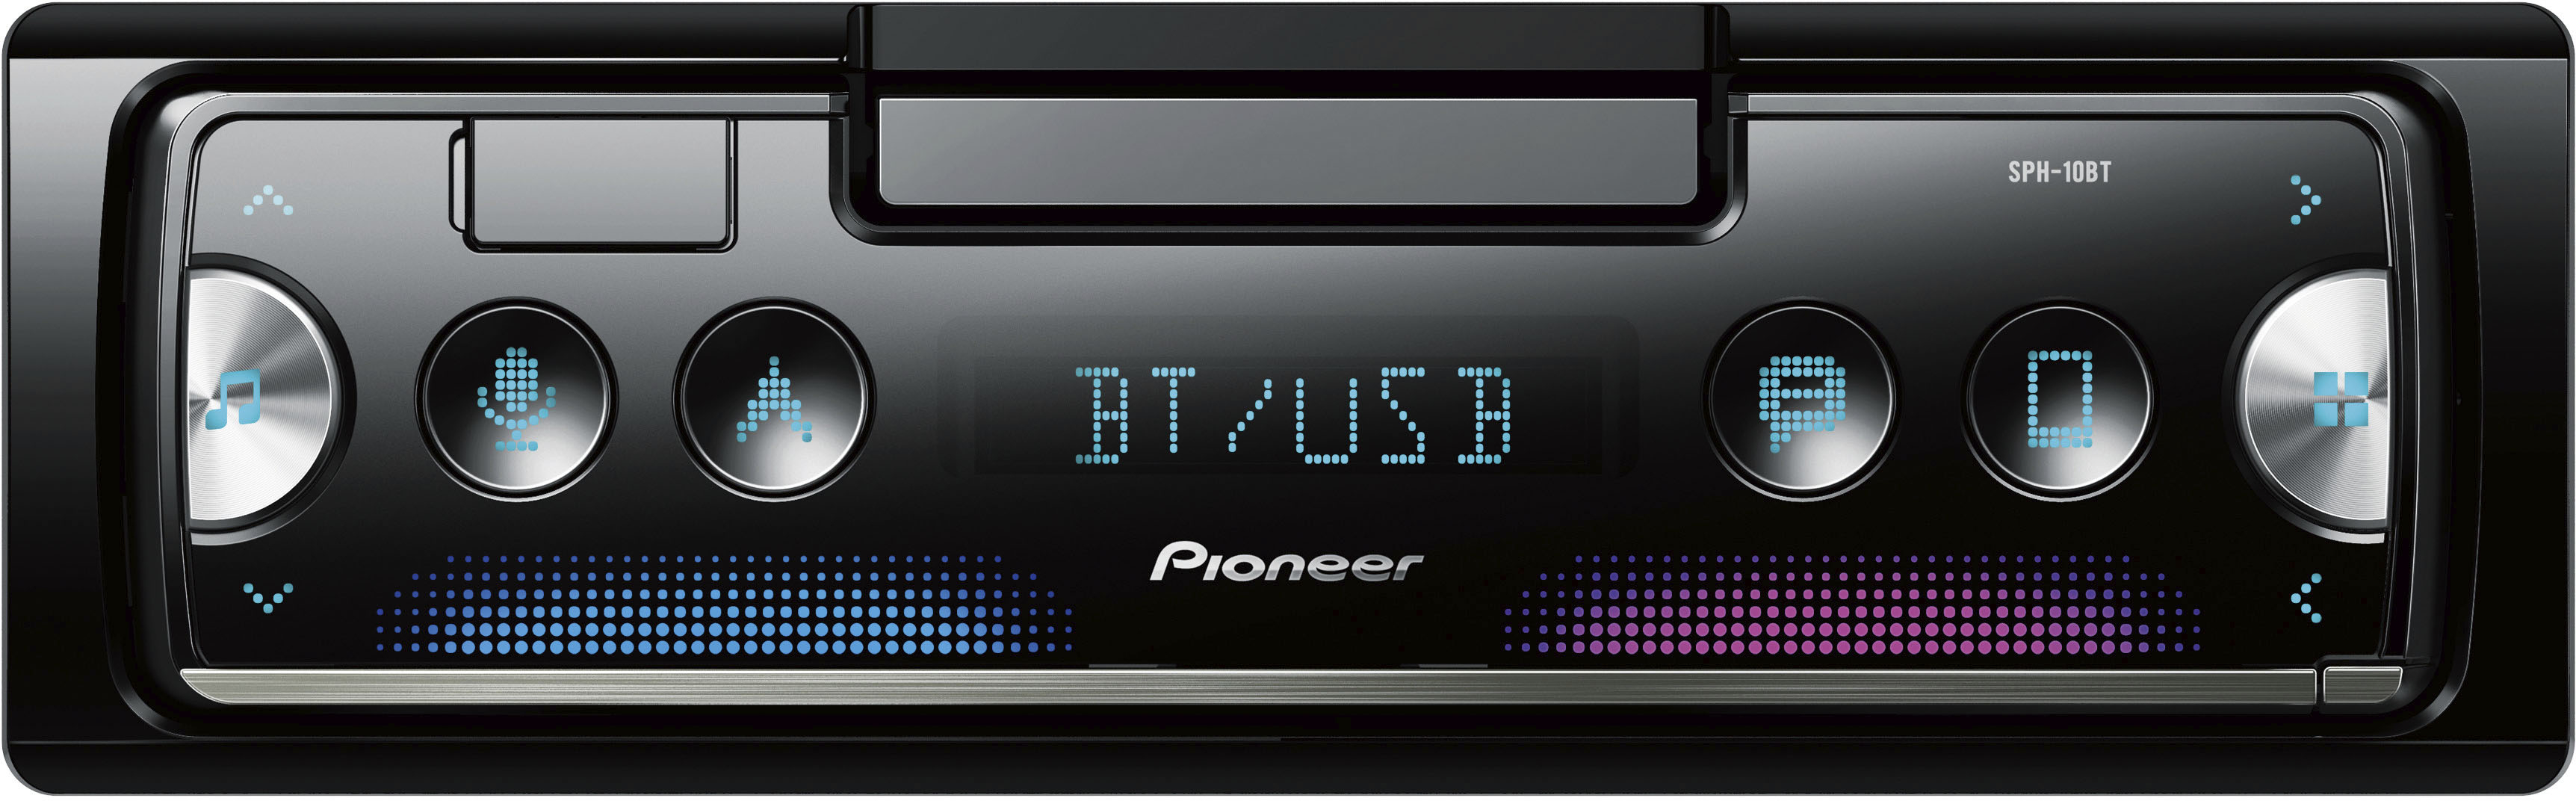 Pioneer In-dash Bluetooth® Audio Digital Media (ADM) Receiver with